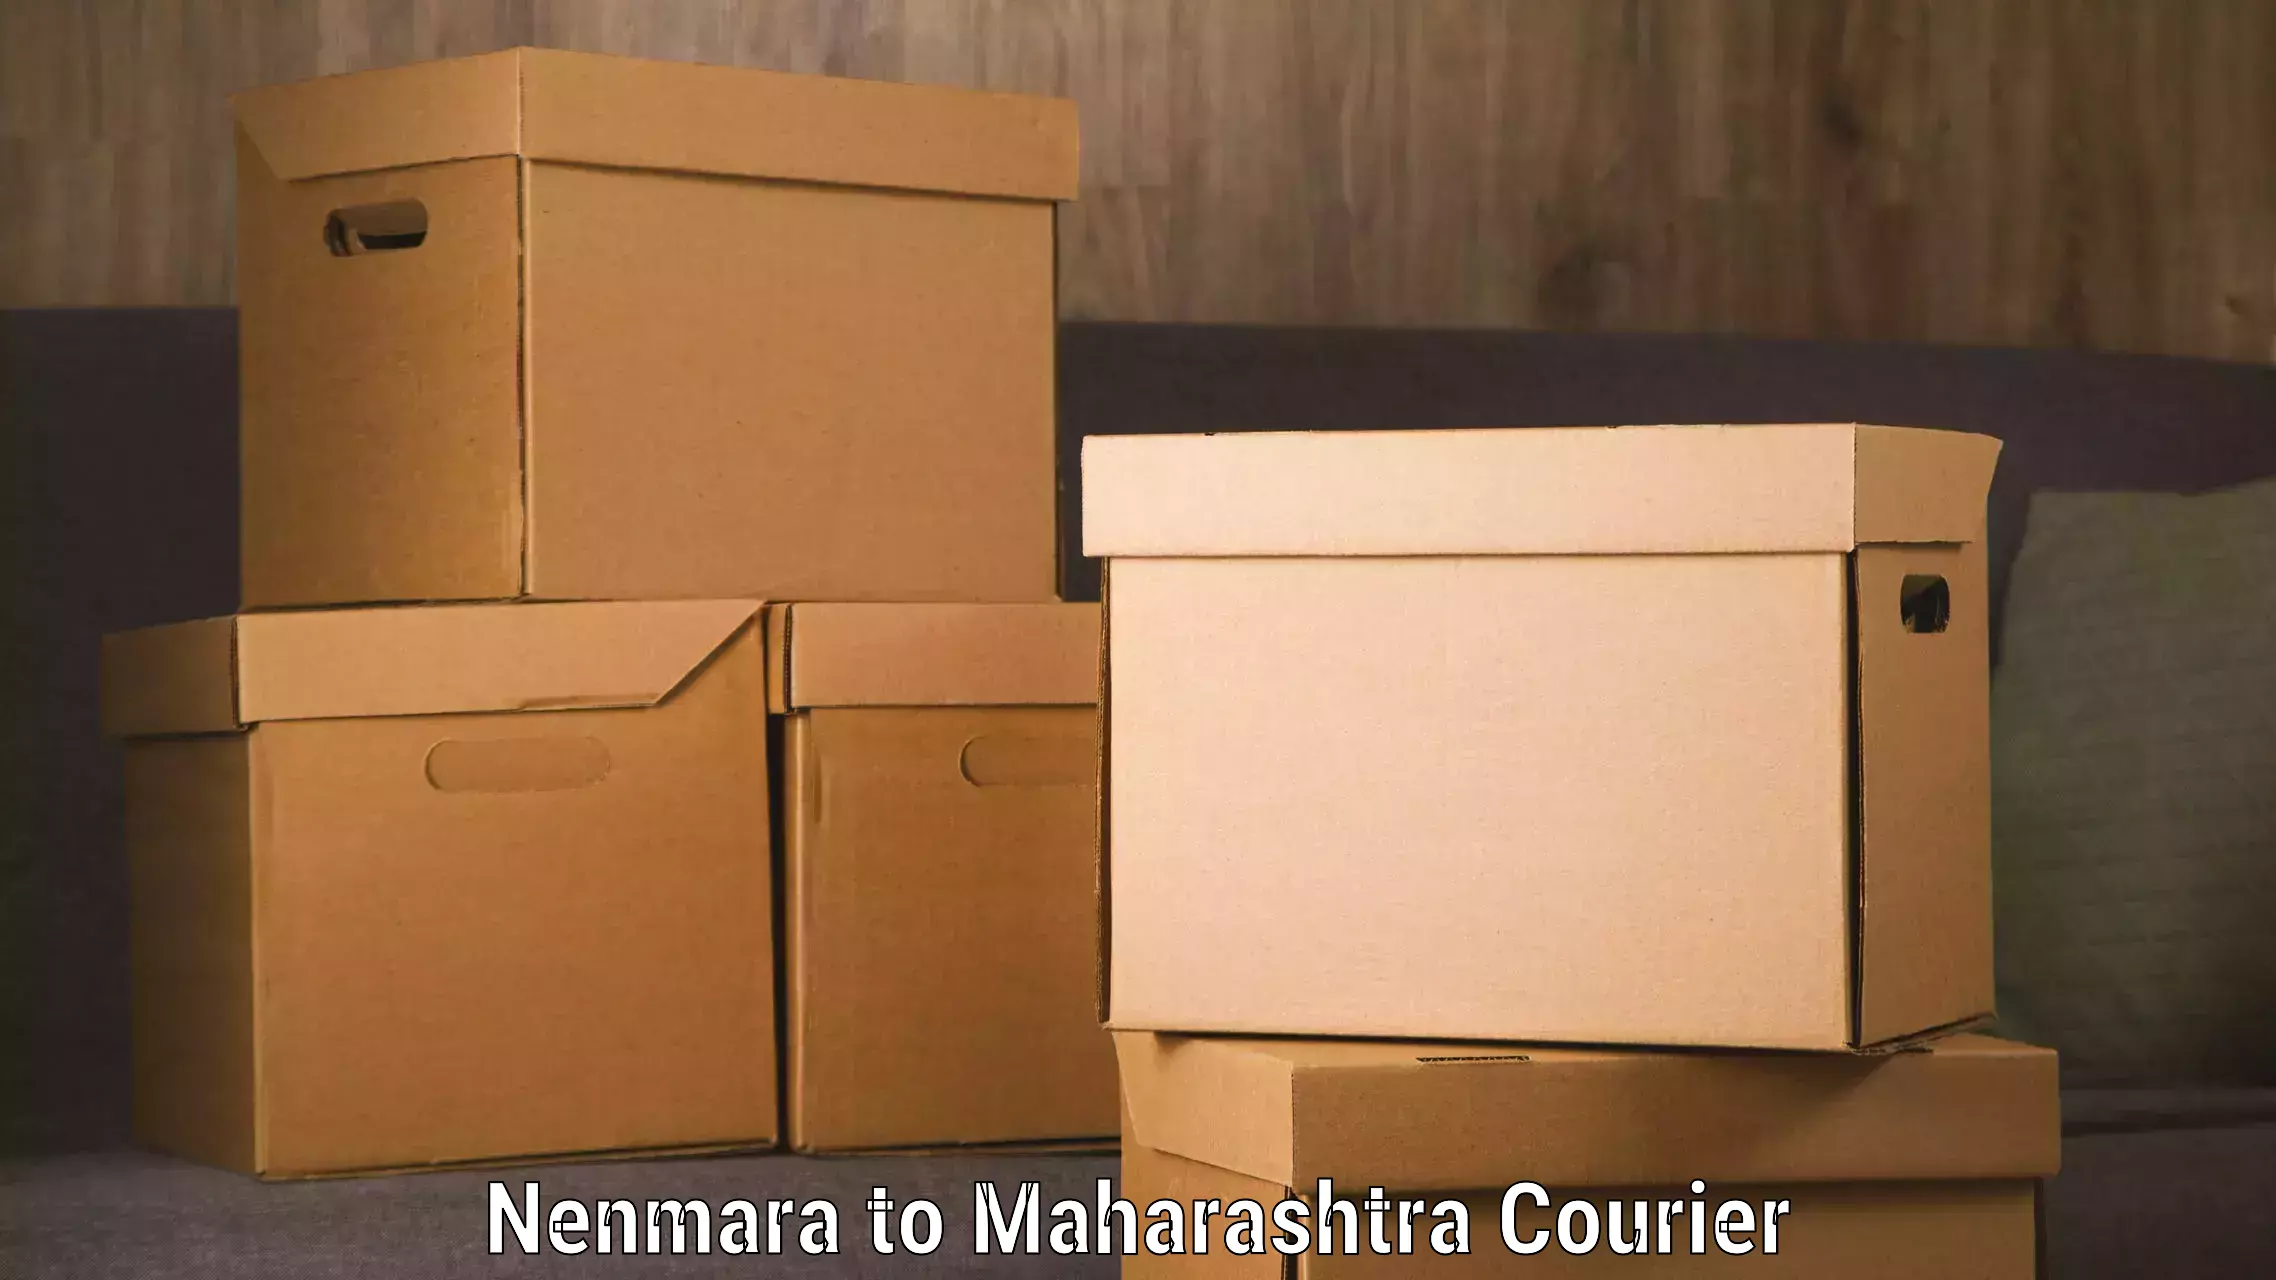 State-of-the-art courier technology Nenmara to Maharashtra